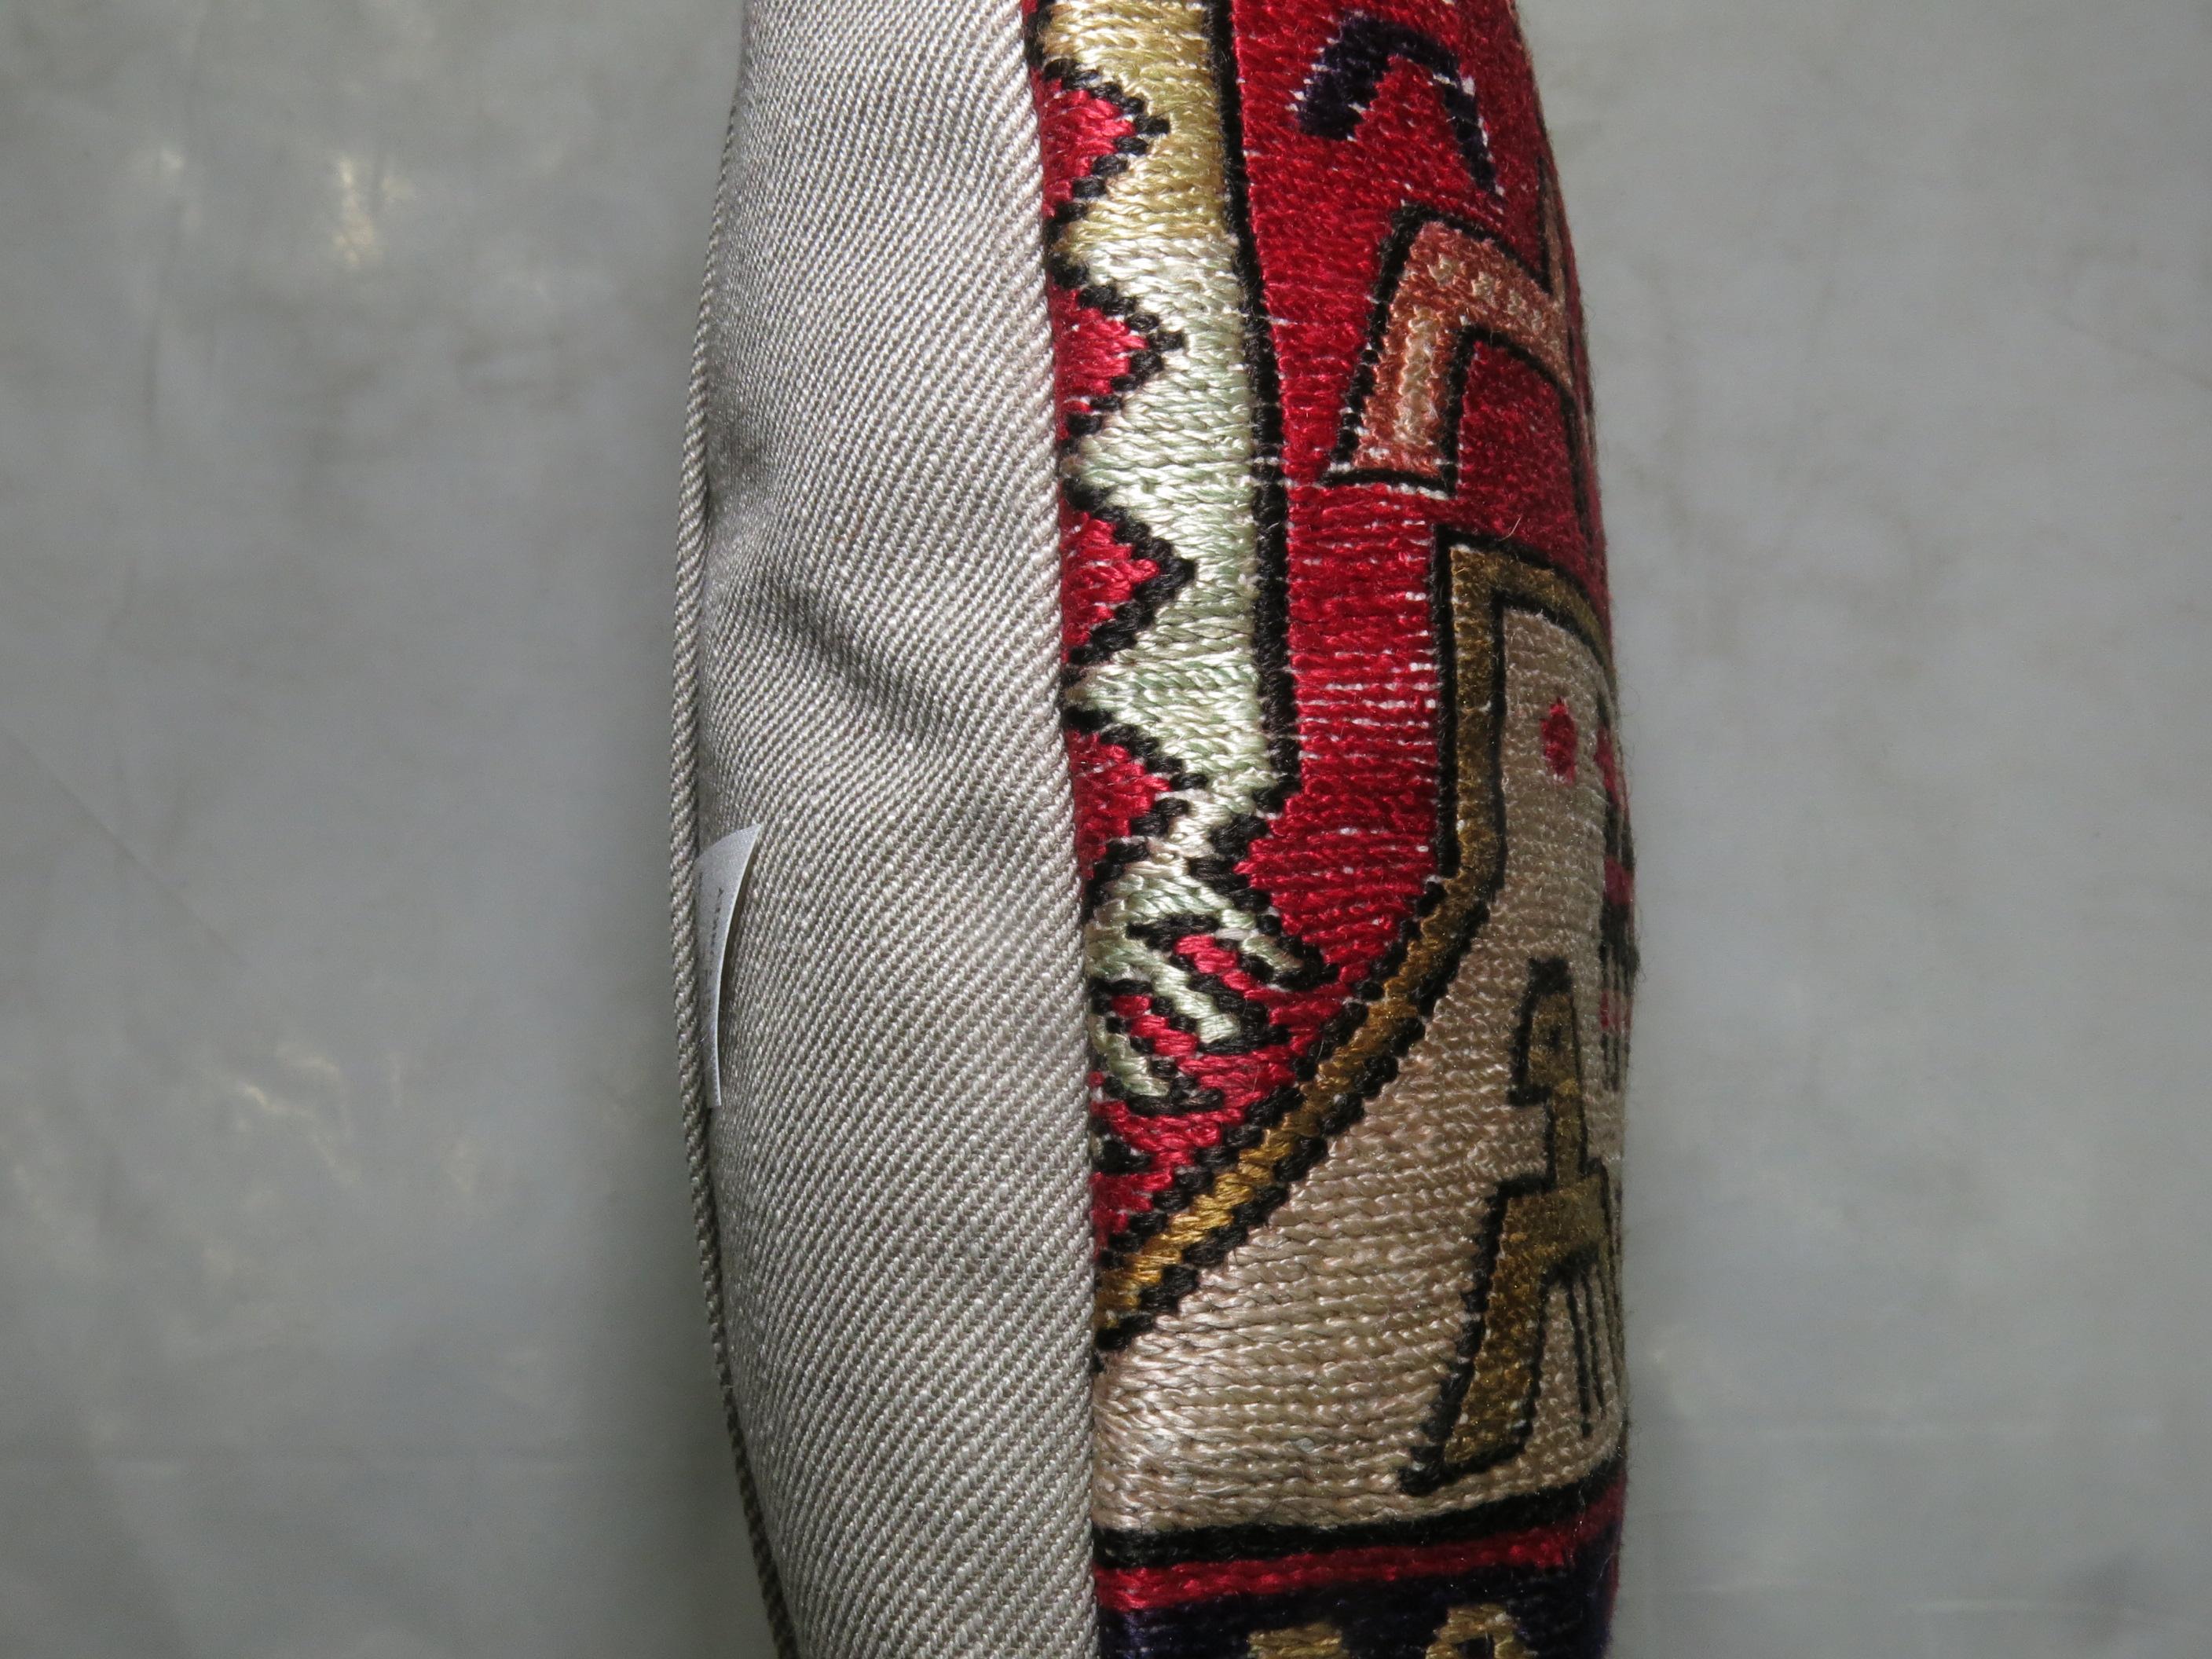 Pillow made from a flat-weave Persian pillow.

1'3'' x 1'3''